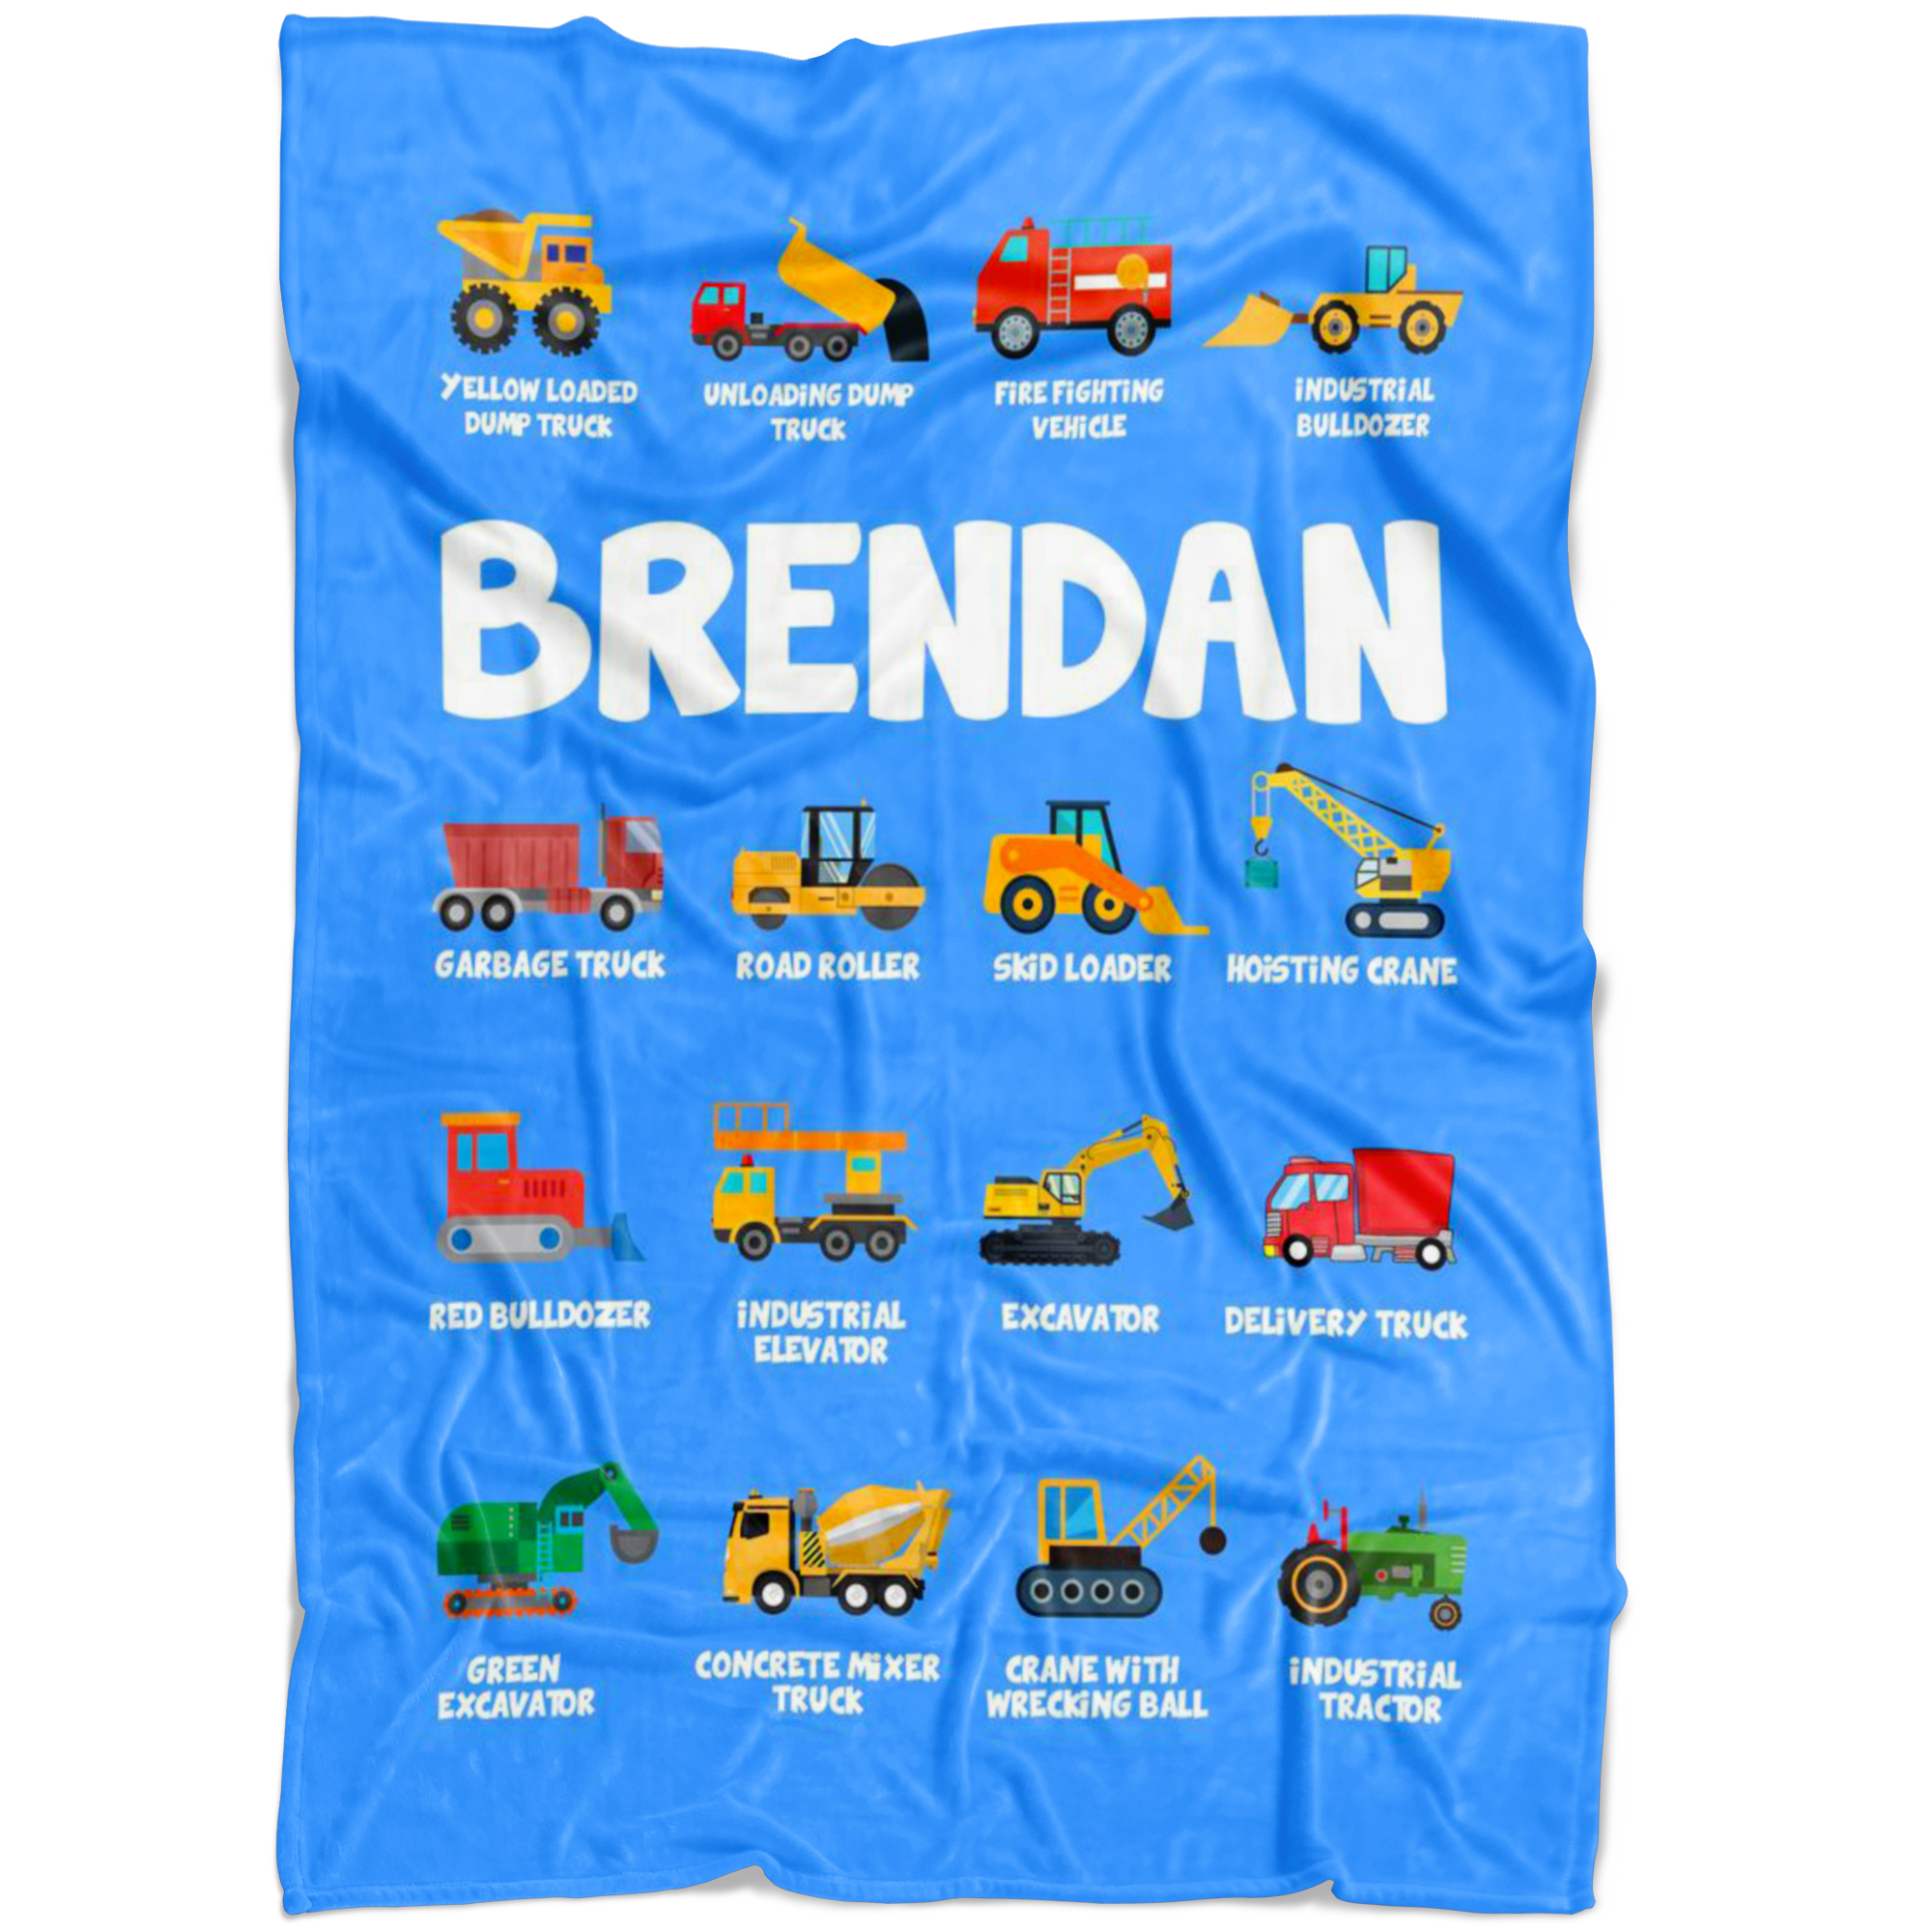 Brendan Construction Blanket Blue